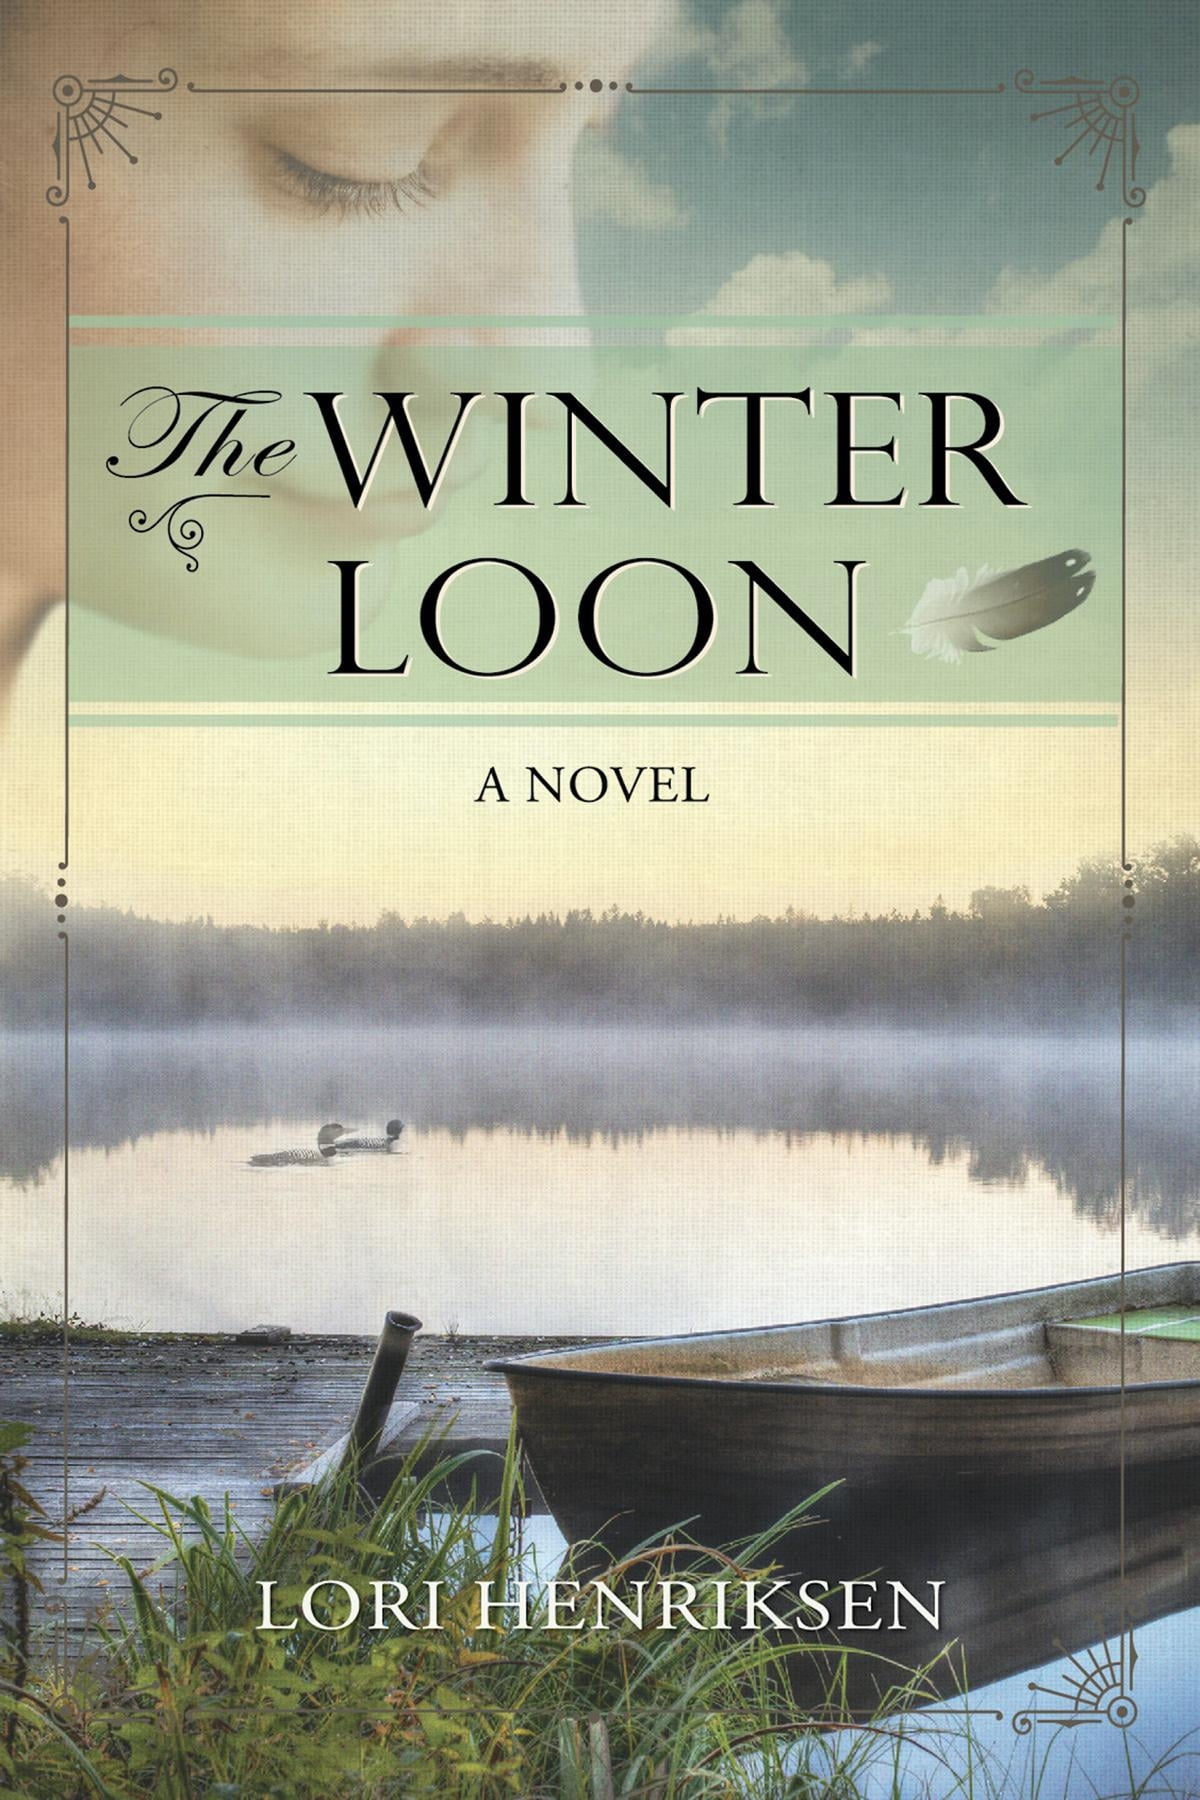 The Winter Loon by Lori Henriksen